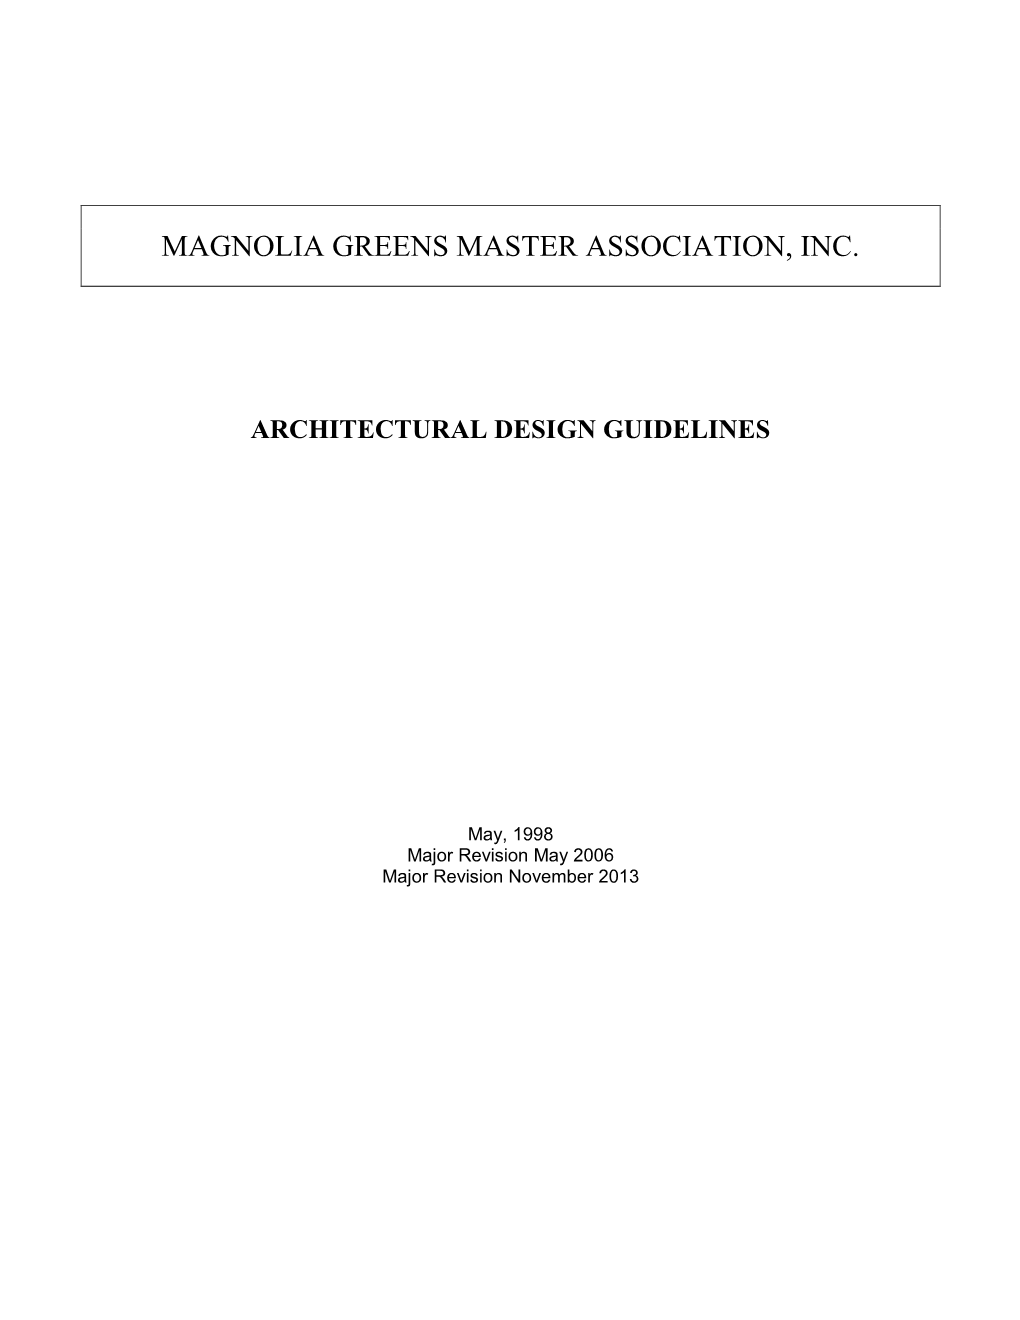 Magnolia Greens Master Association, Inc